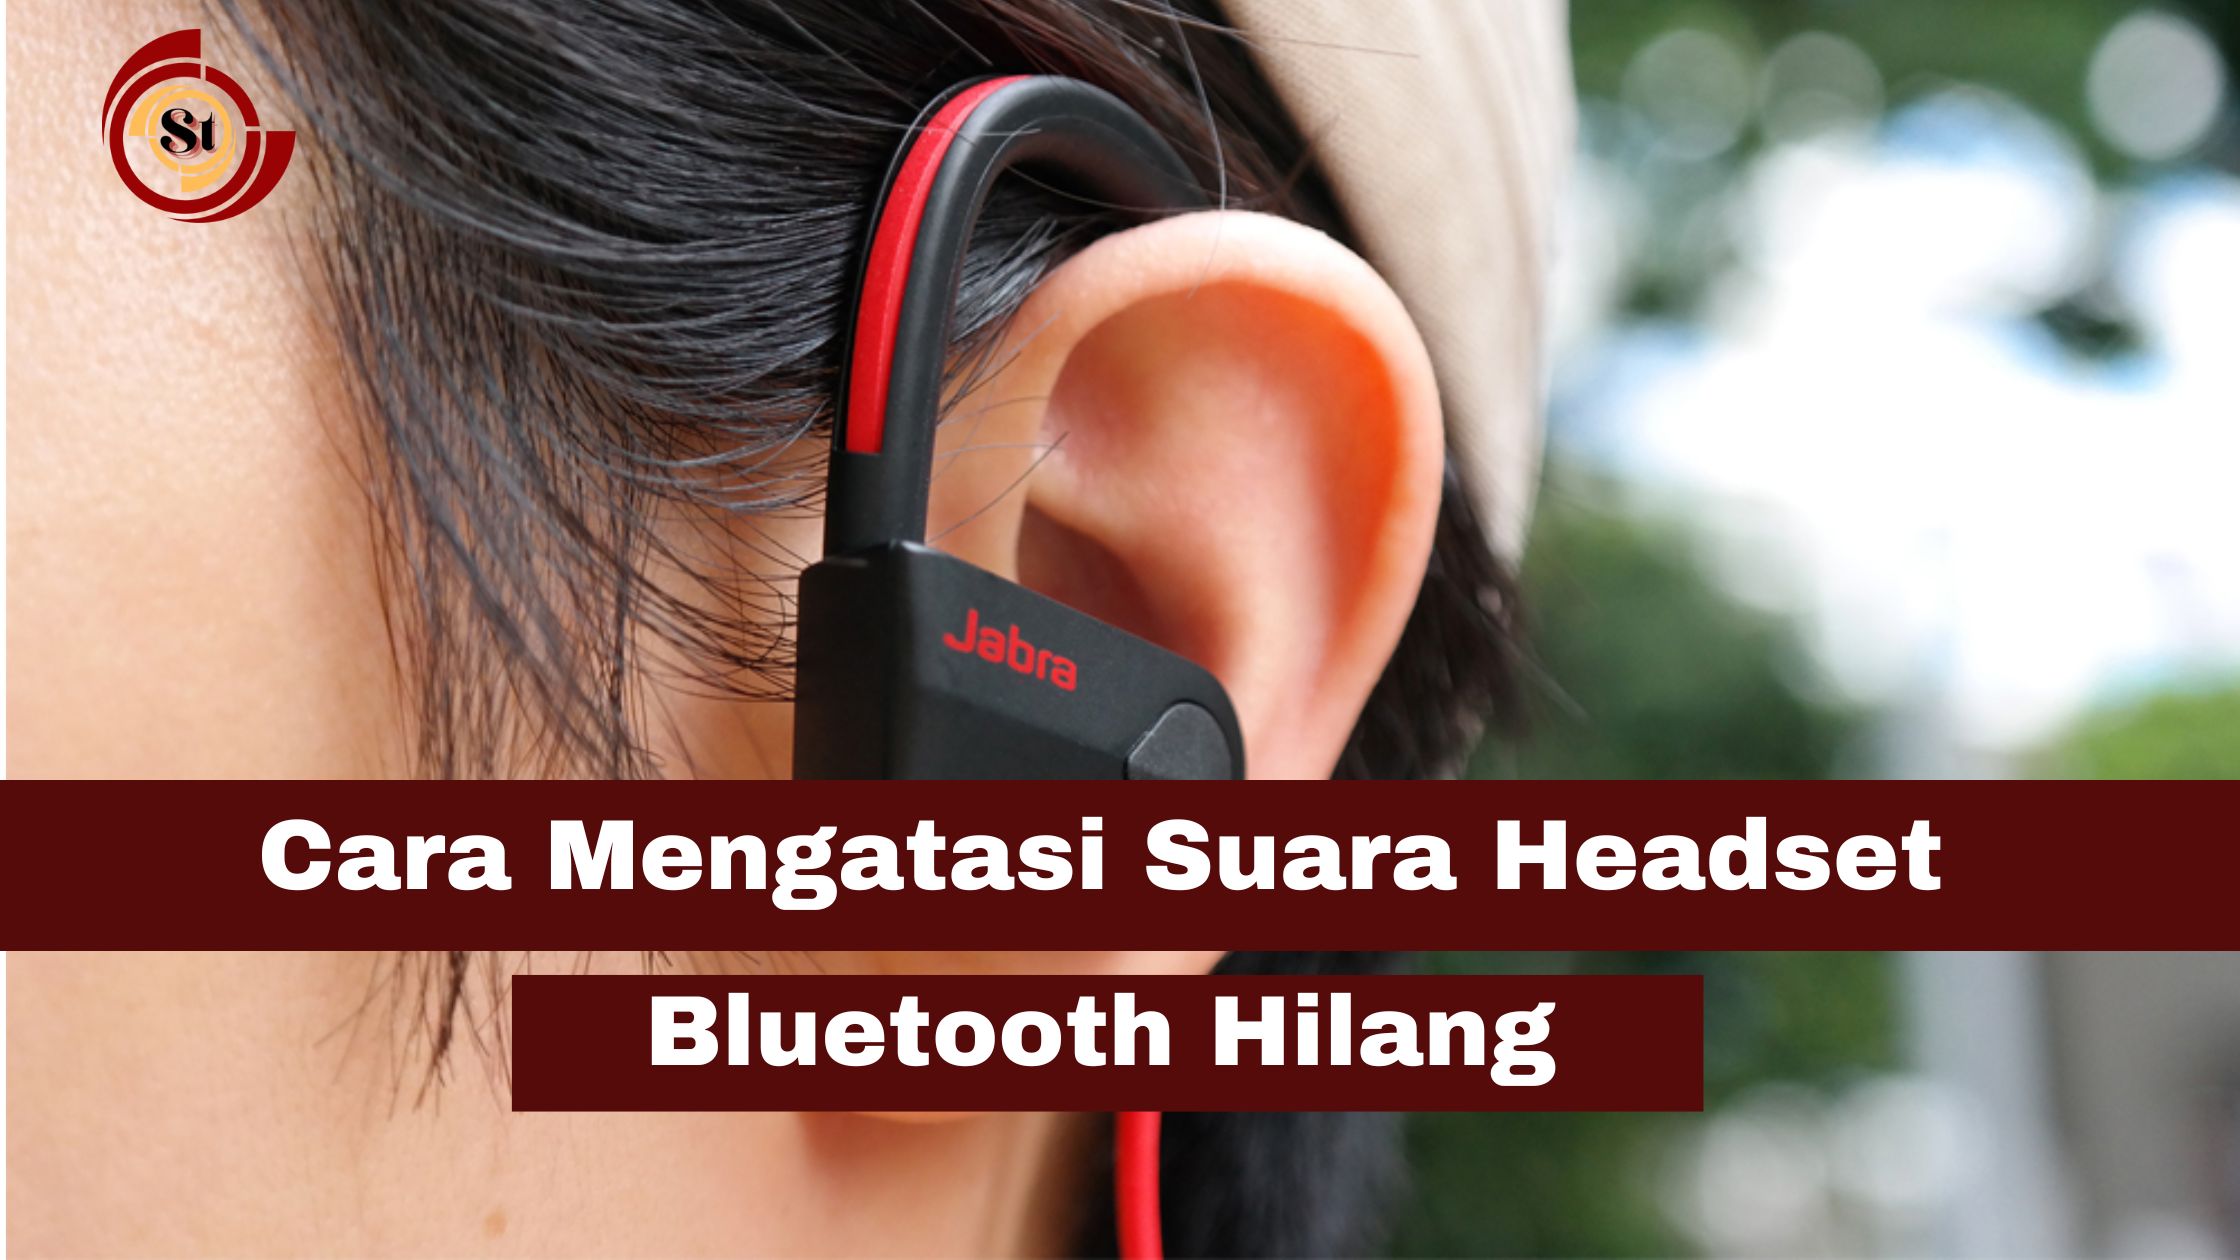 Mengatasi Suara Headset Bluetooth Hilang